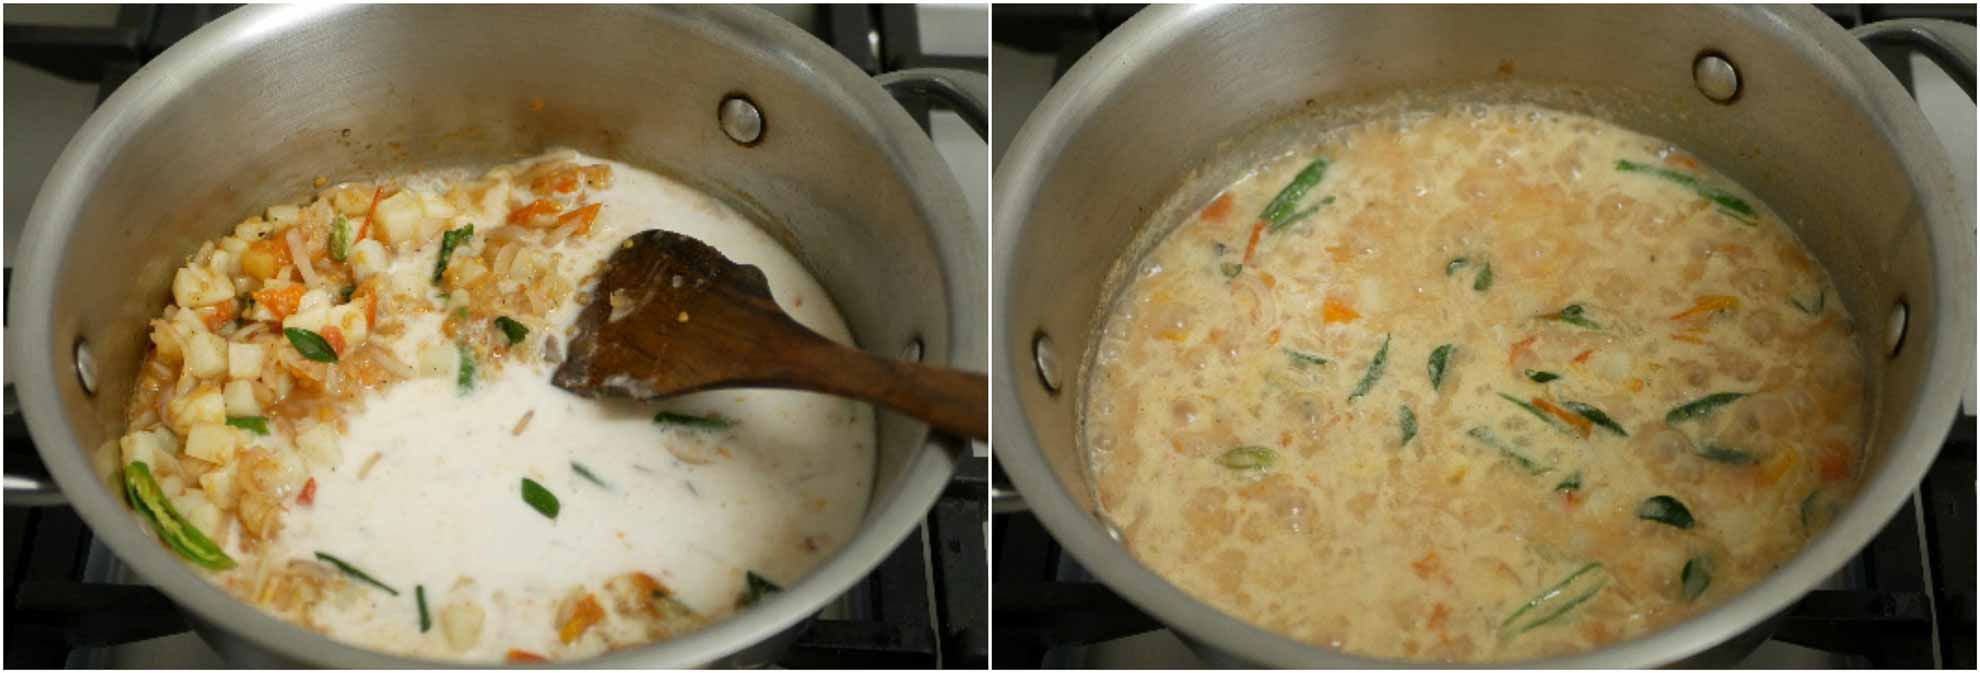 kerala-mutton-stew-recipe-for-appam-9